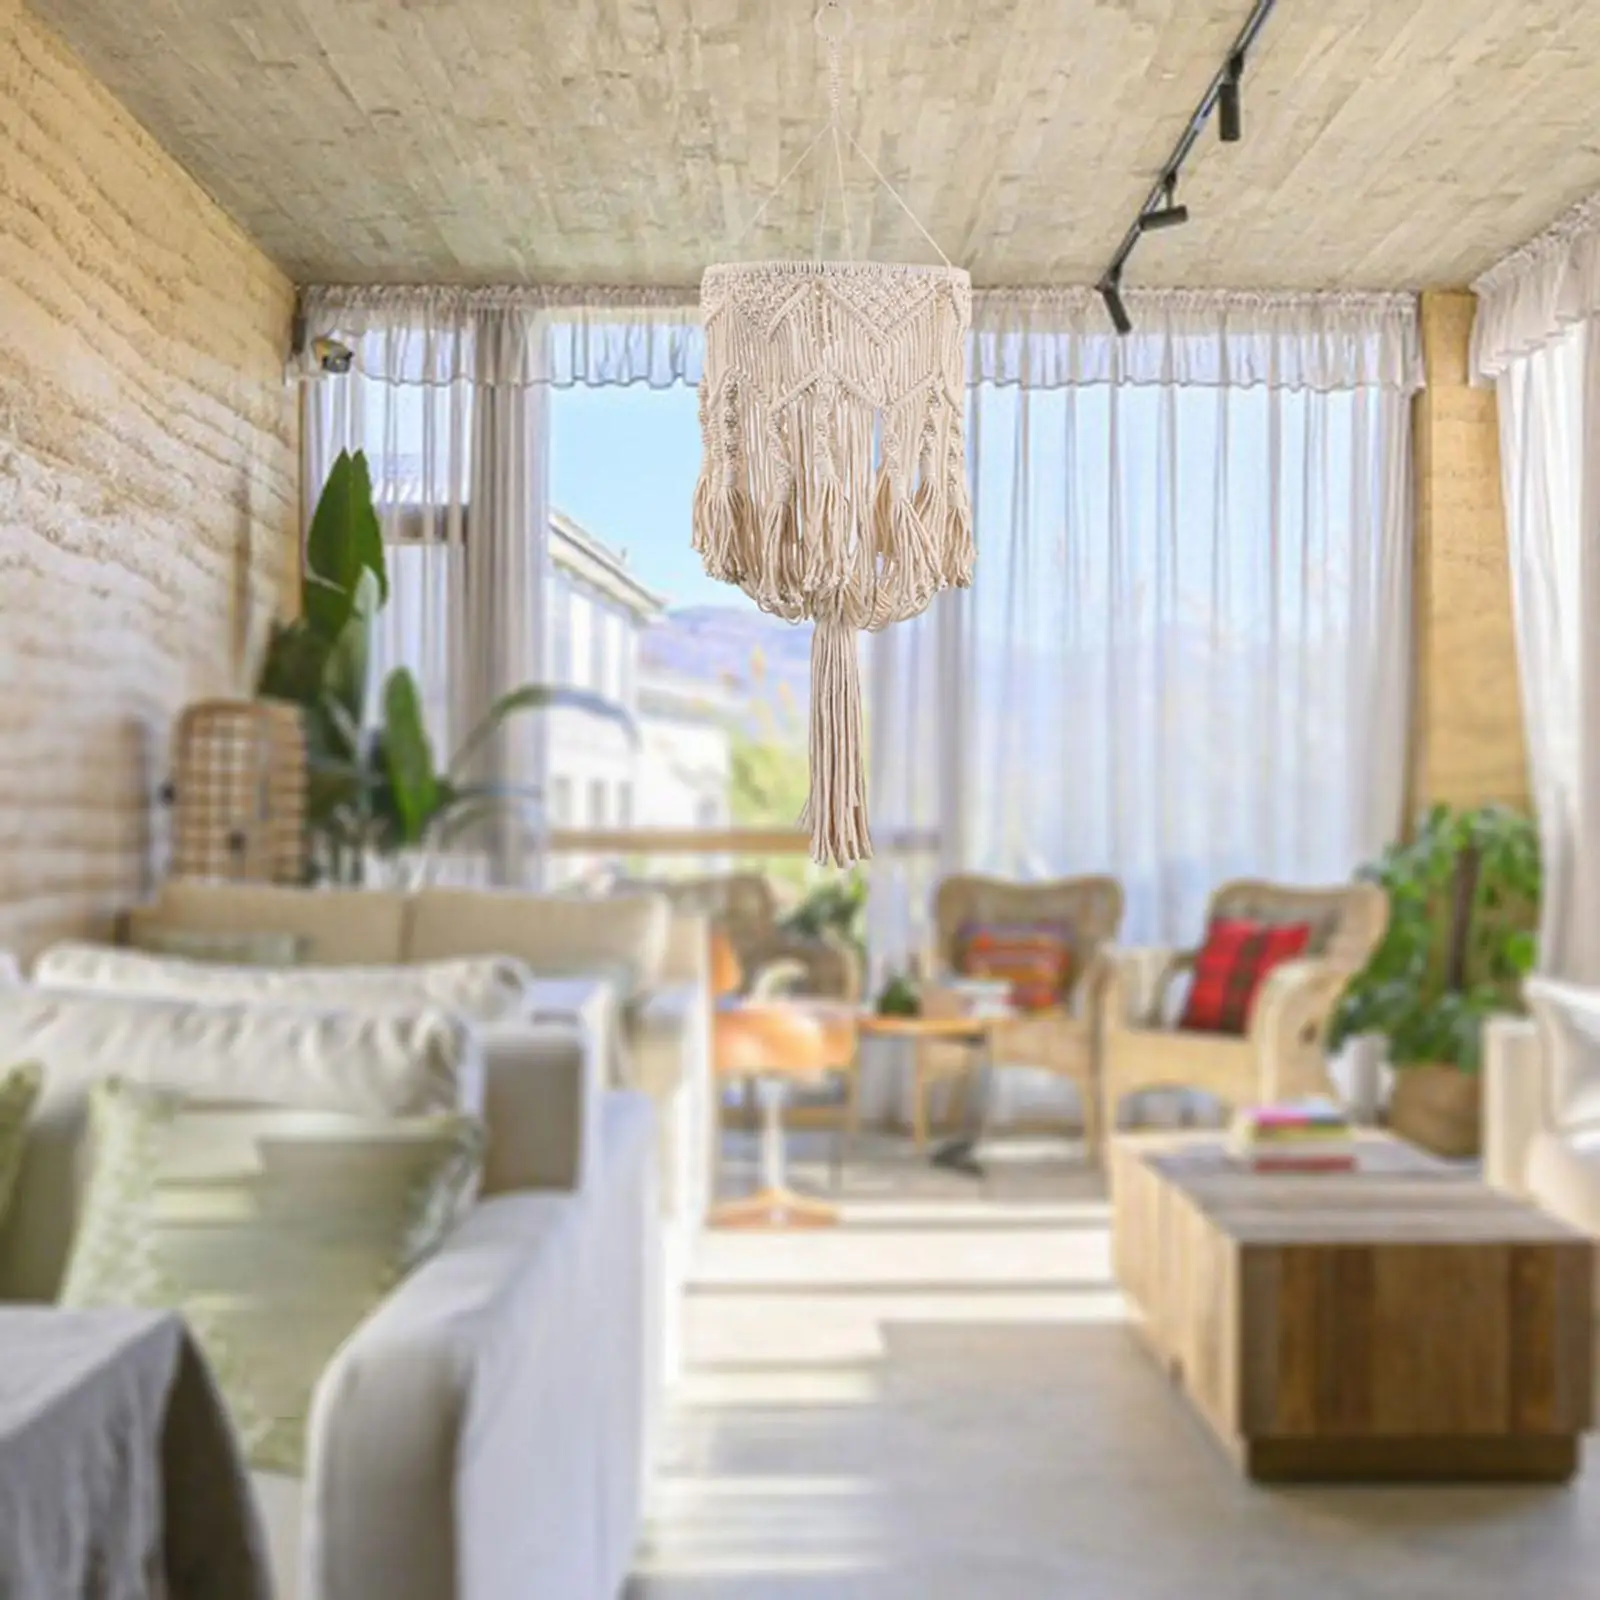 Nordic Macrame Lamp Shade Pendant Light Cover Boho Hand Woven Hanging Lampshade for Living Room Hotel Home Nursery Decor